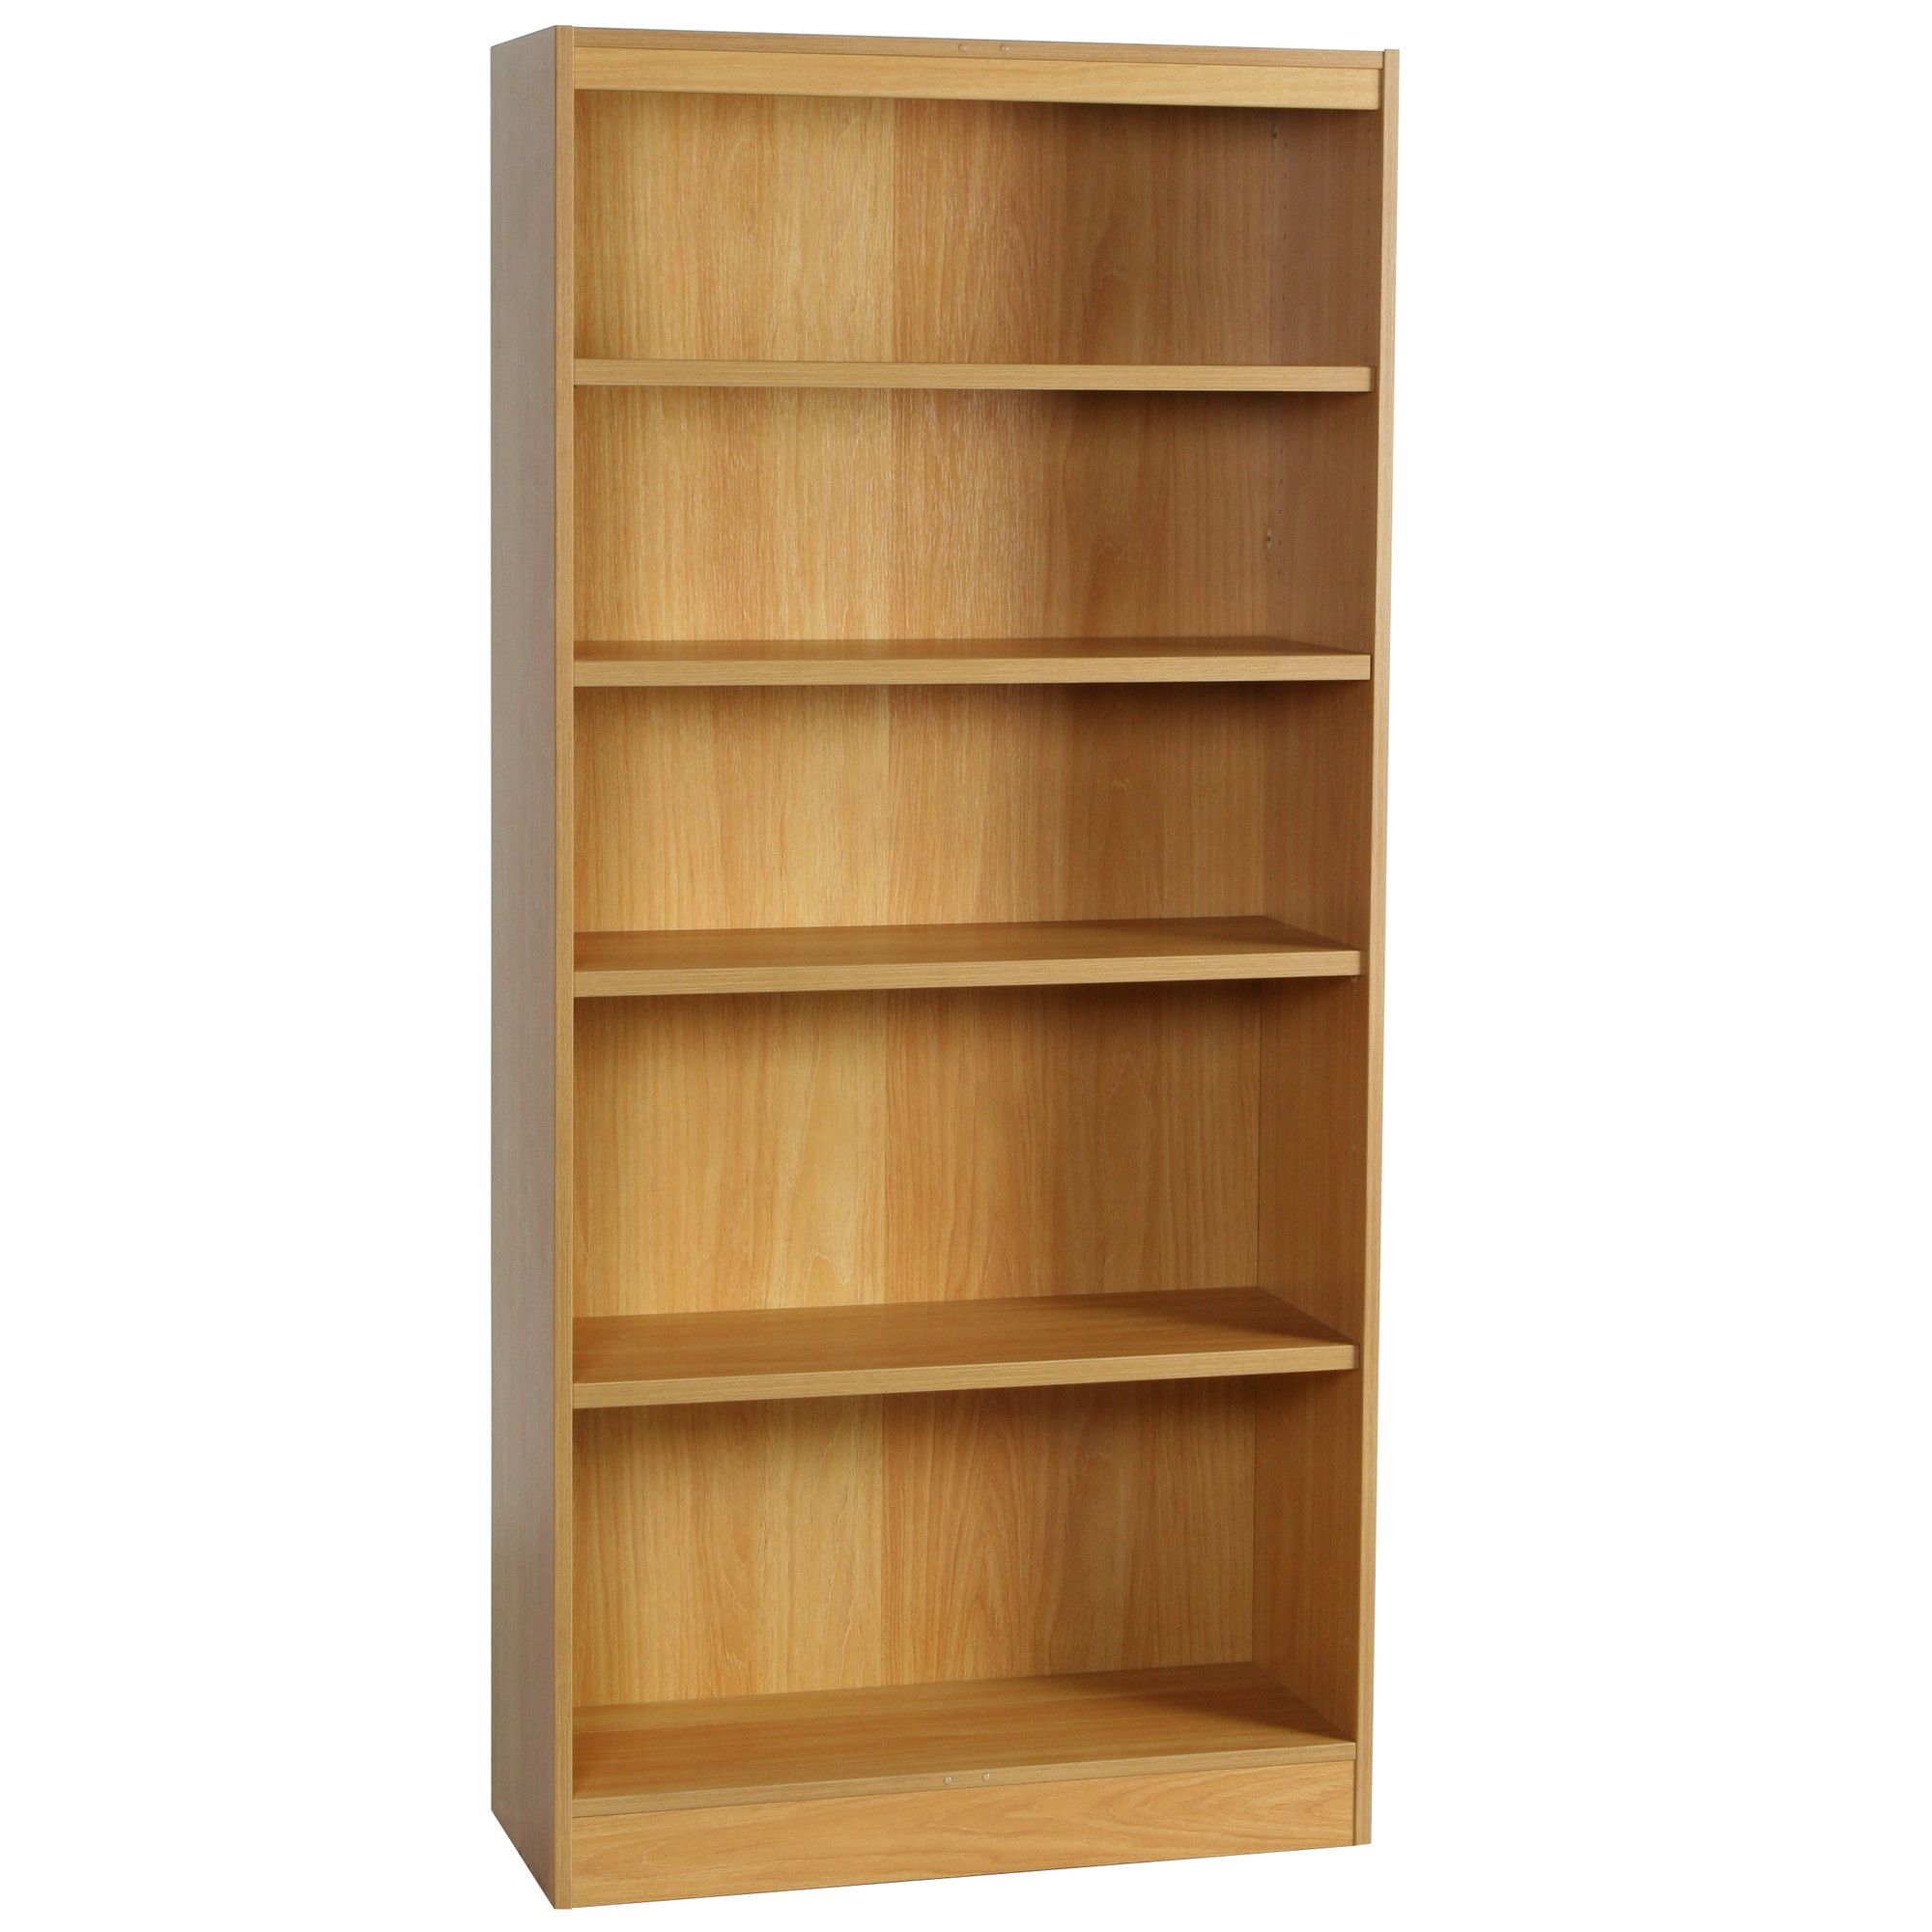 Enduro Five Shelf Tall Narrow Bookcase - Walnut at Tesco Direct